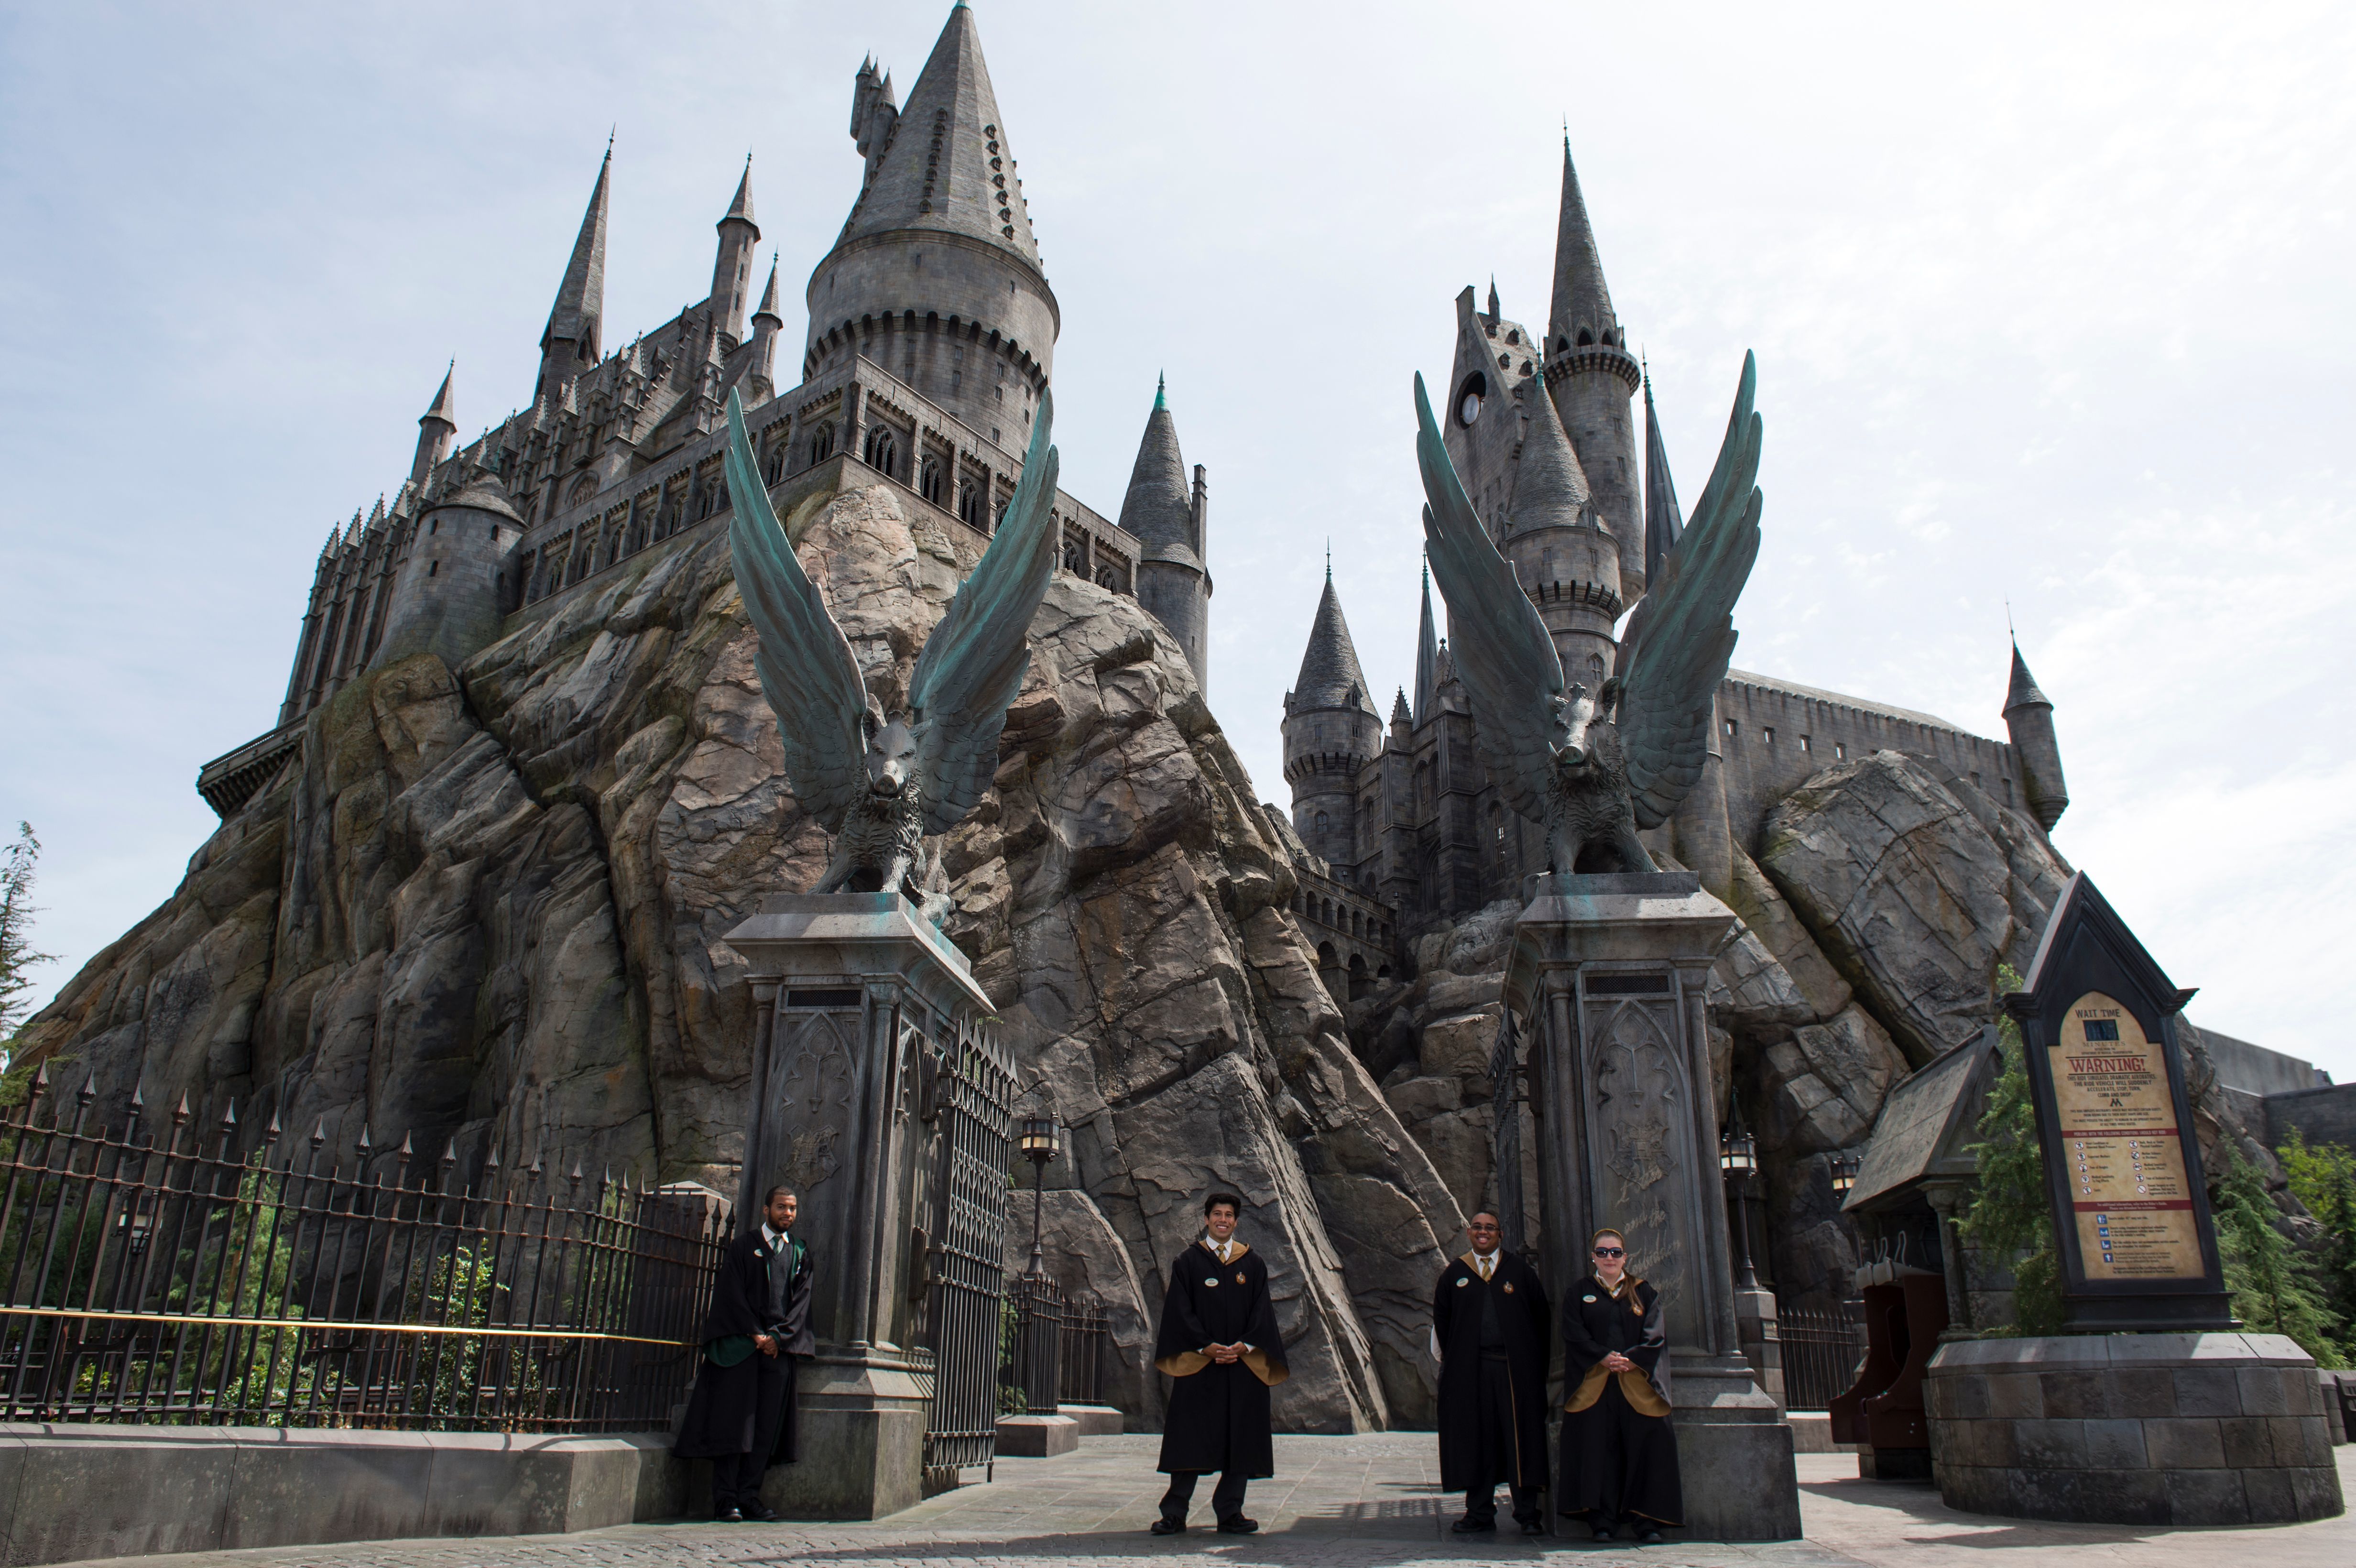 Wizarding World of Harry Potter Hogwarts Castle